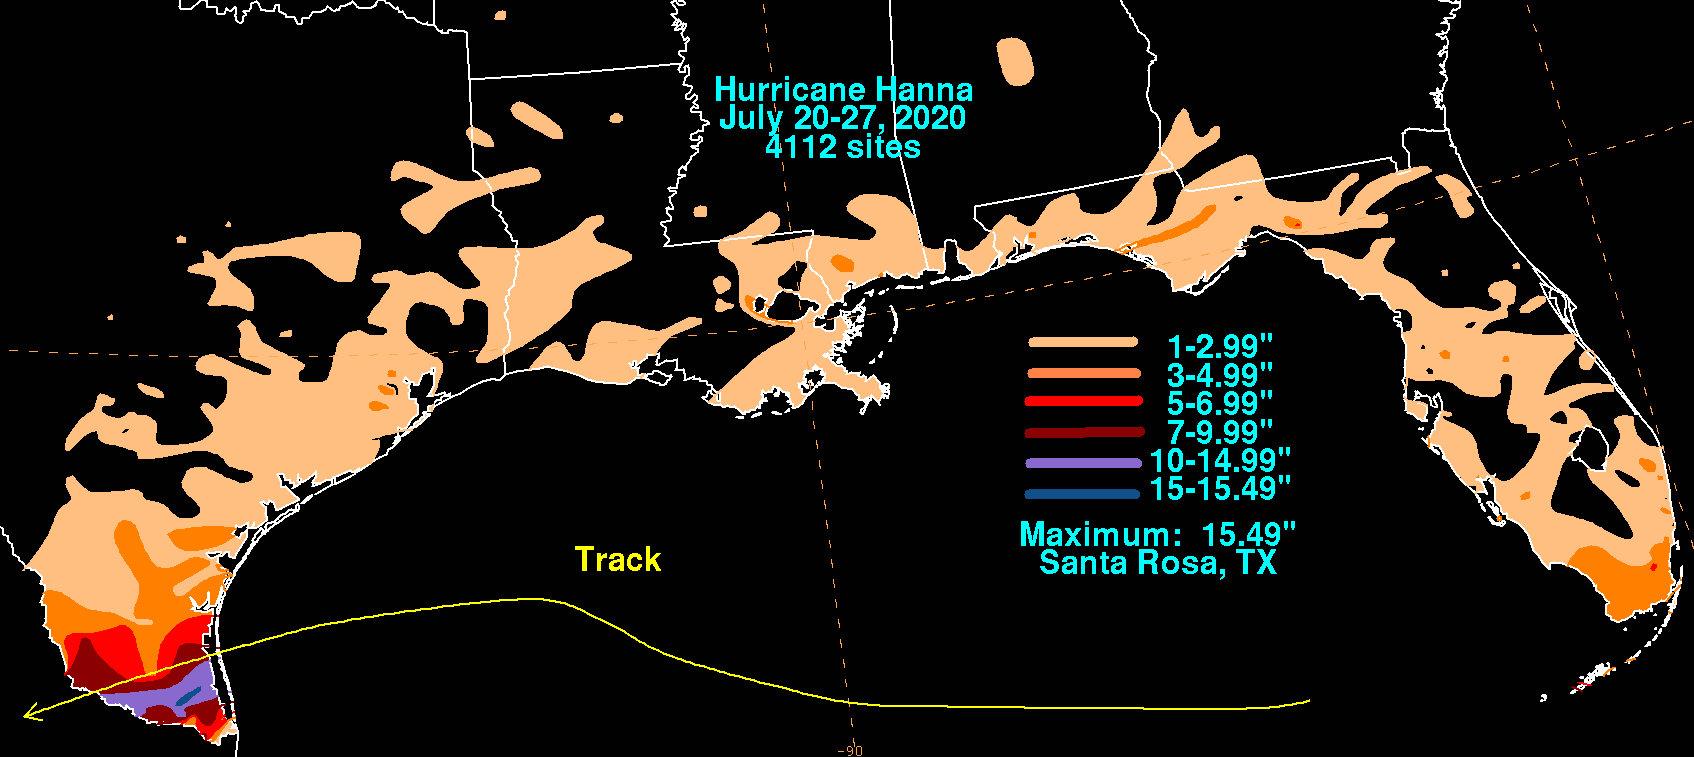 Hurricane Hanna (2020) Rainfall